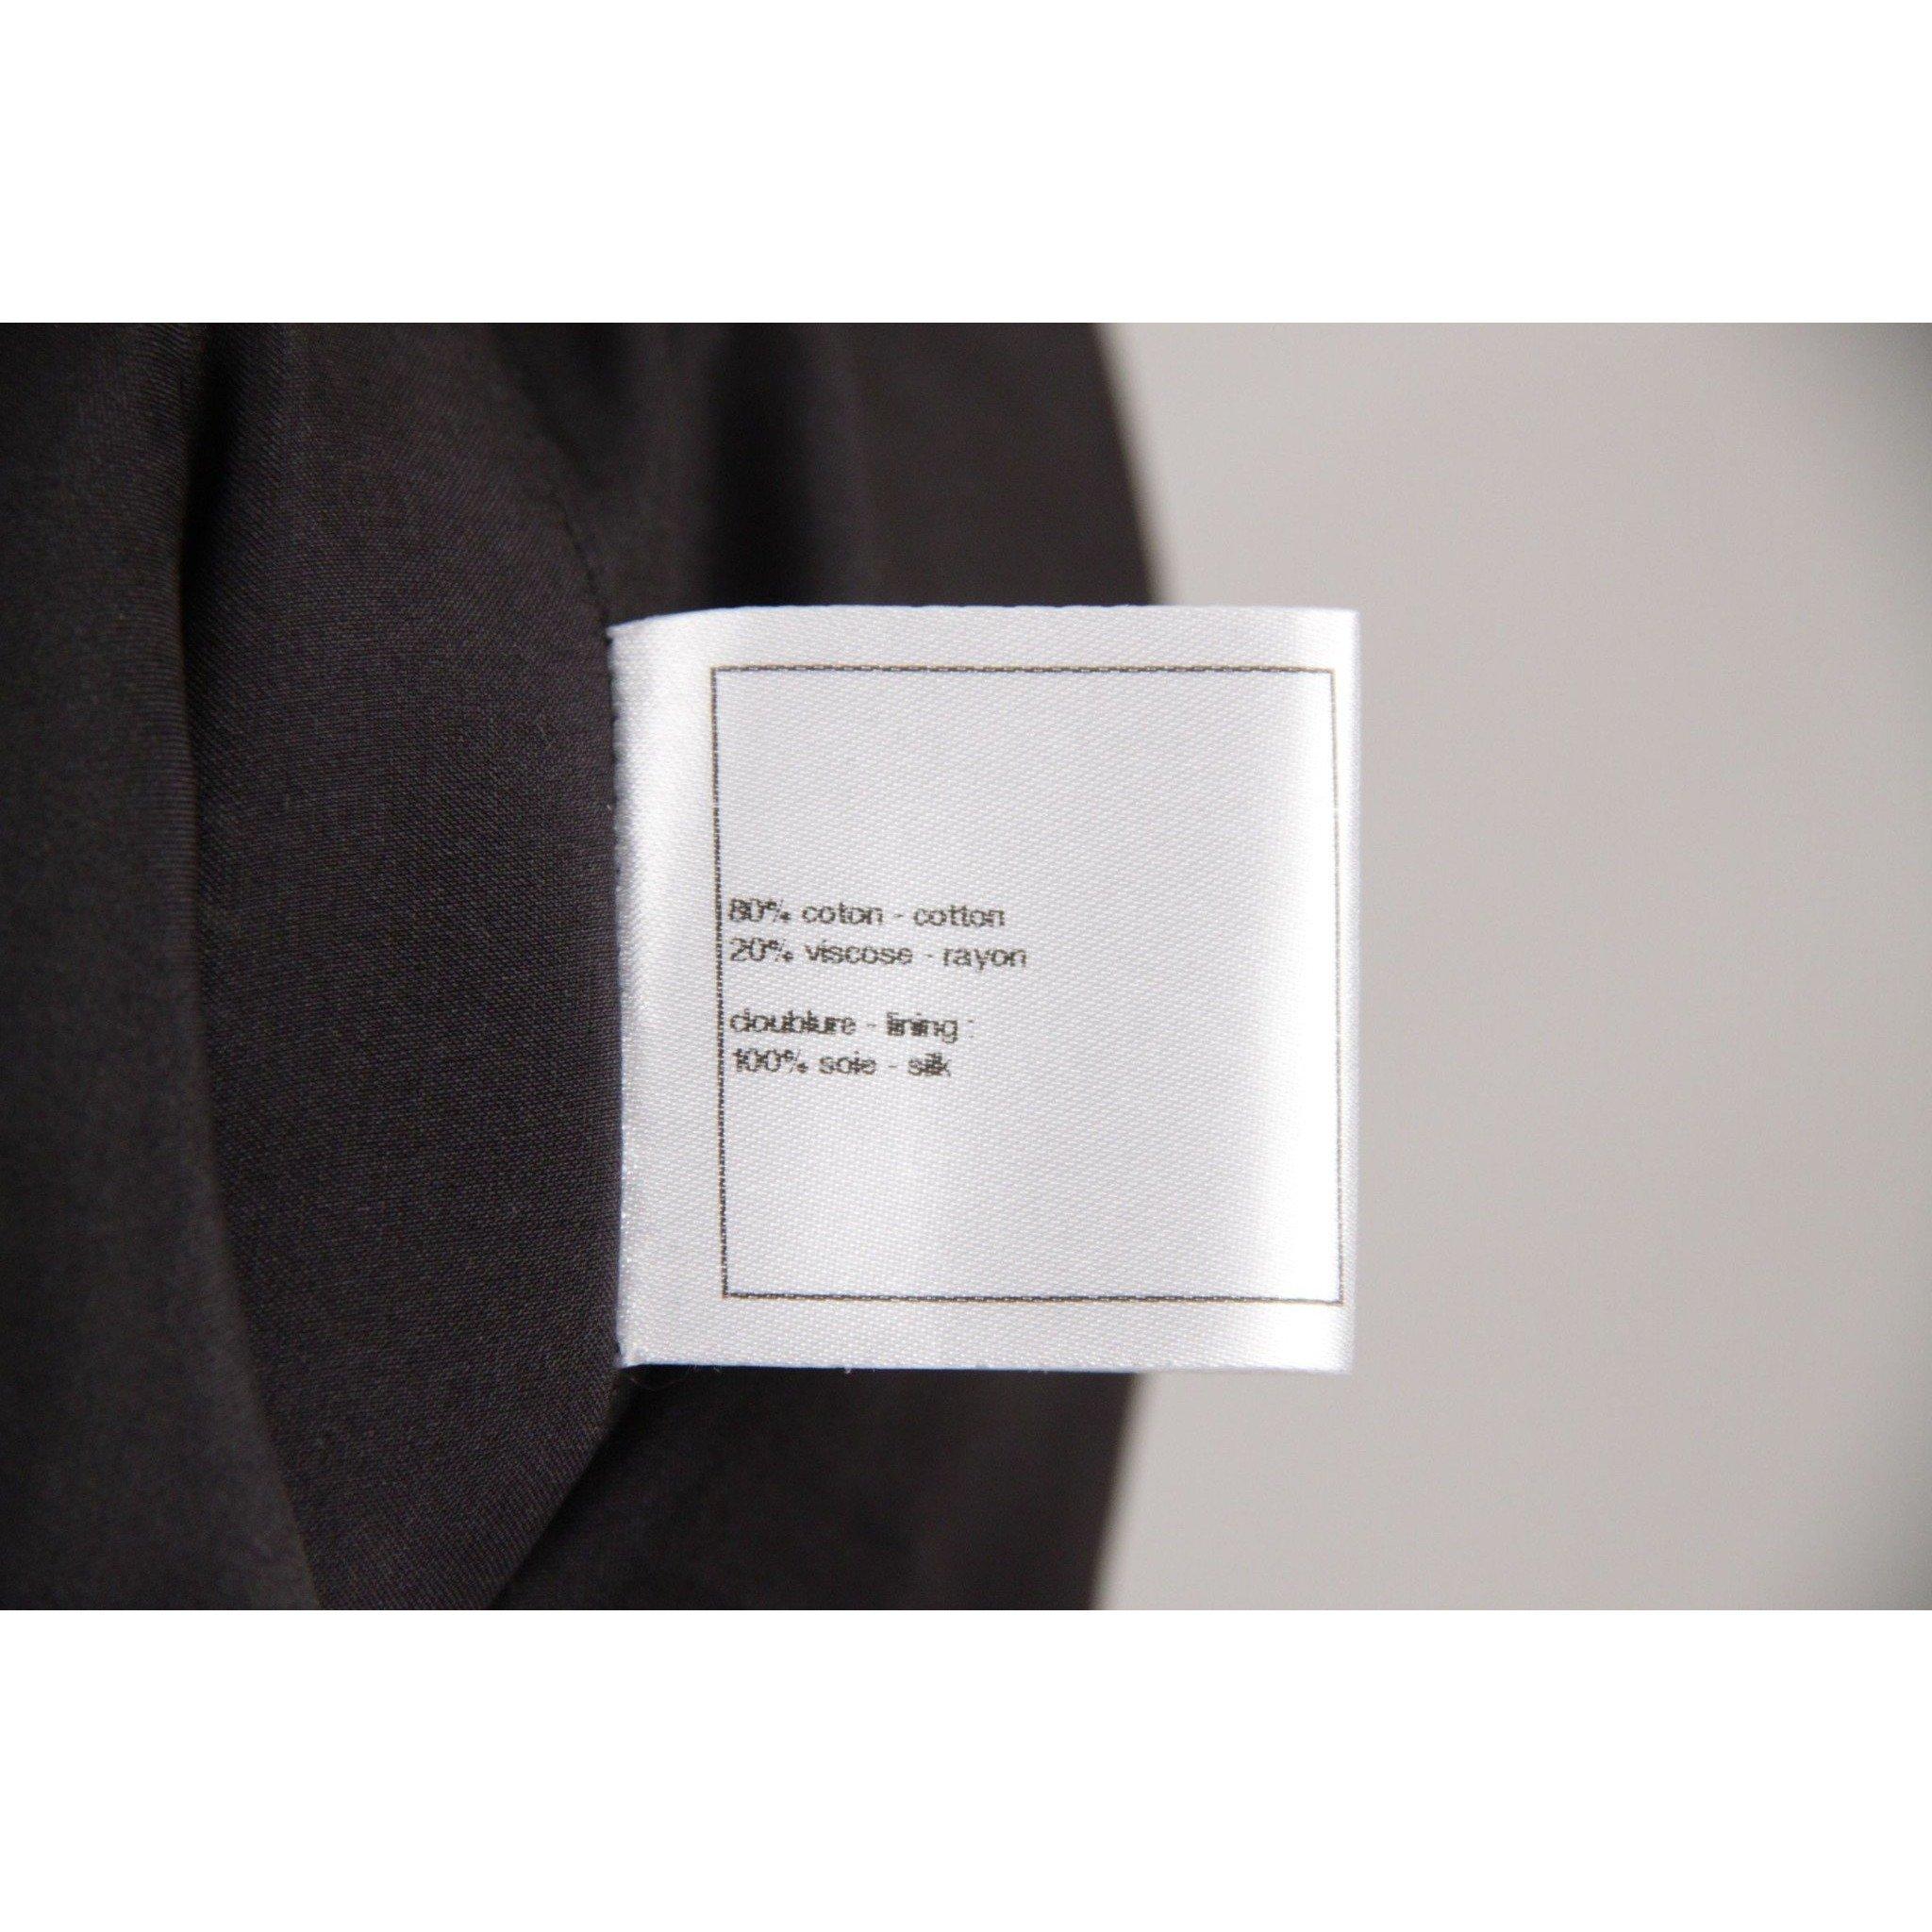 Chanel Black & White Cotton Blend SHEATH DRESS Sleeveless SIZE 38 5